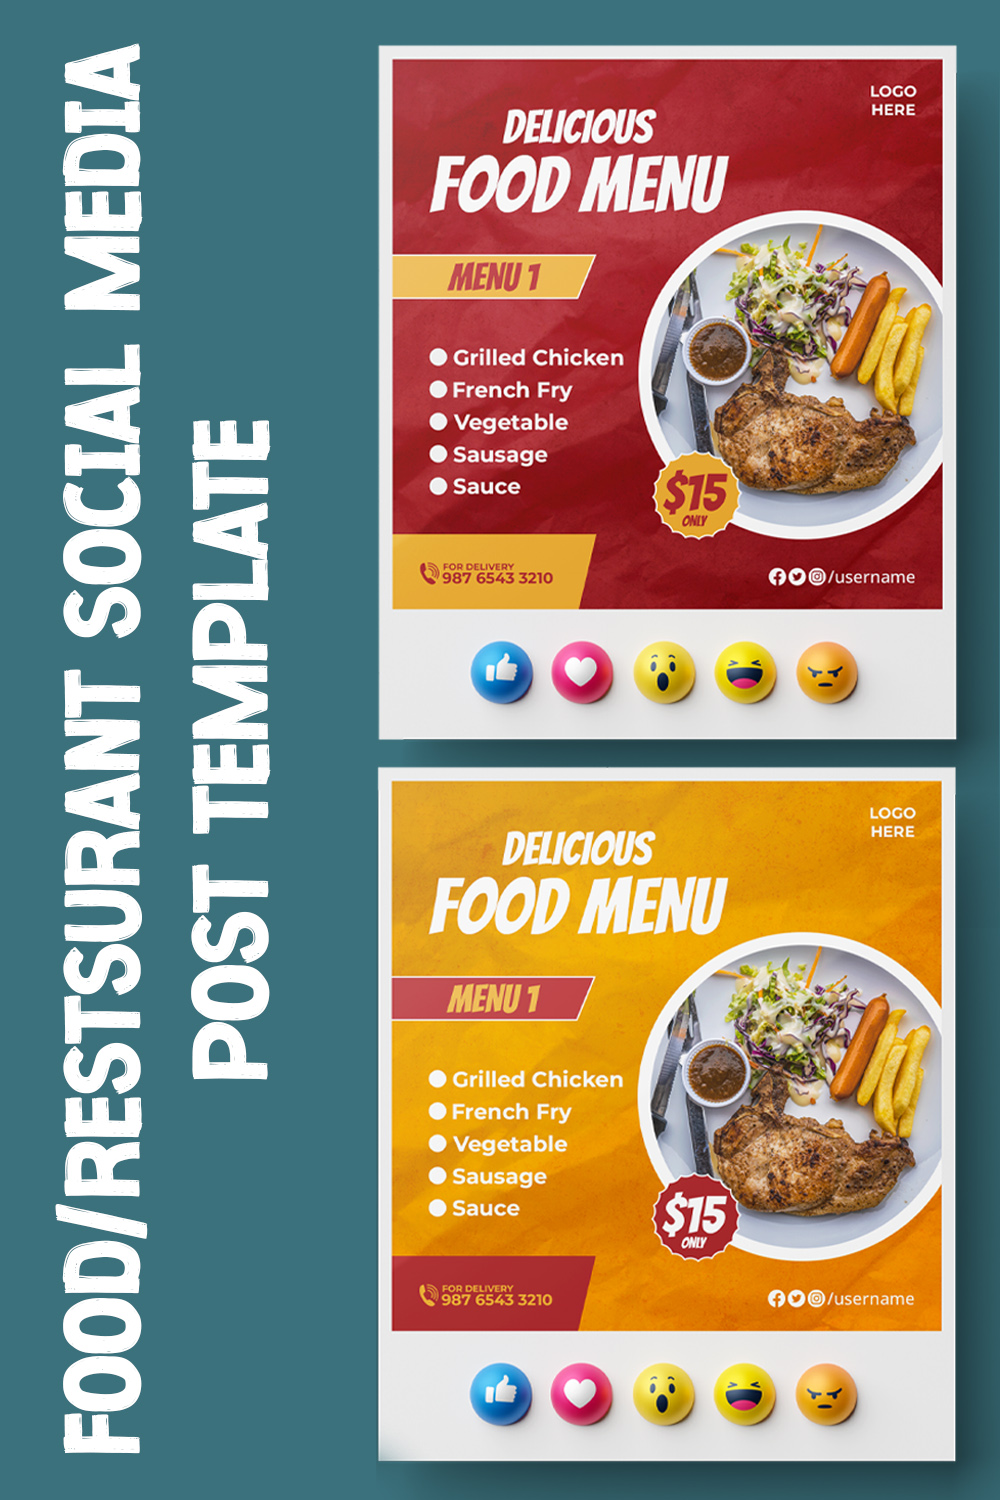 2 Delicious Food Menu Restaurant Social Media Banner Templates pinterest preview image.